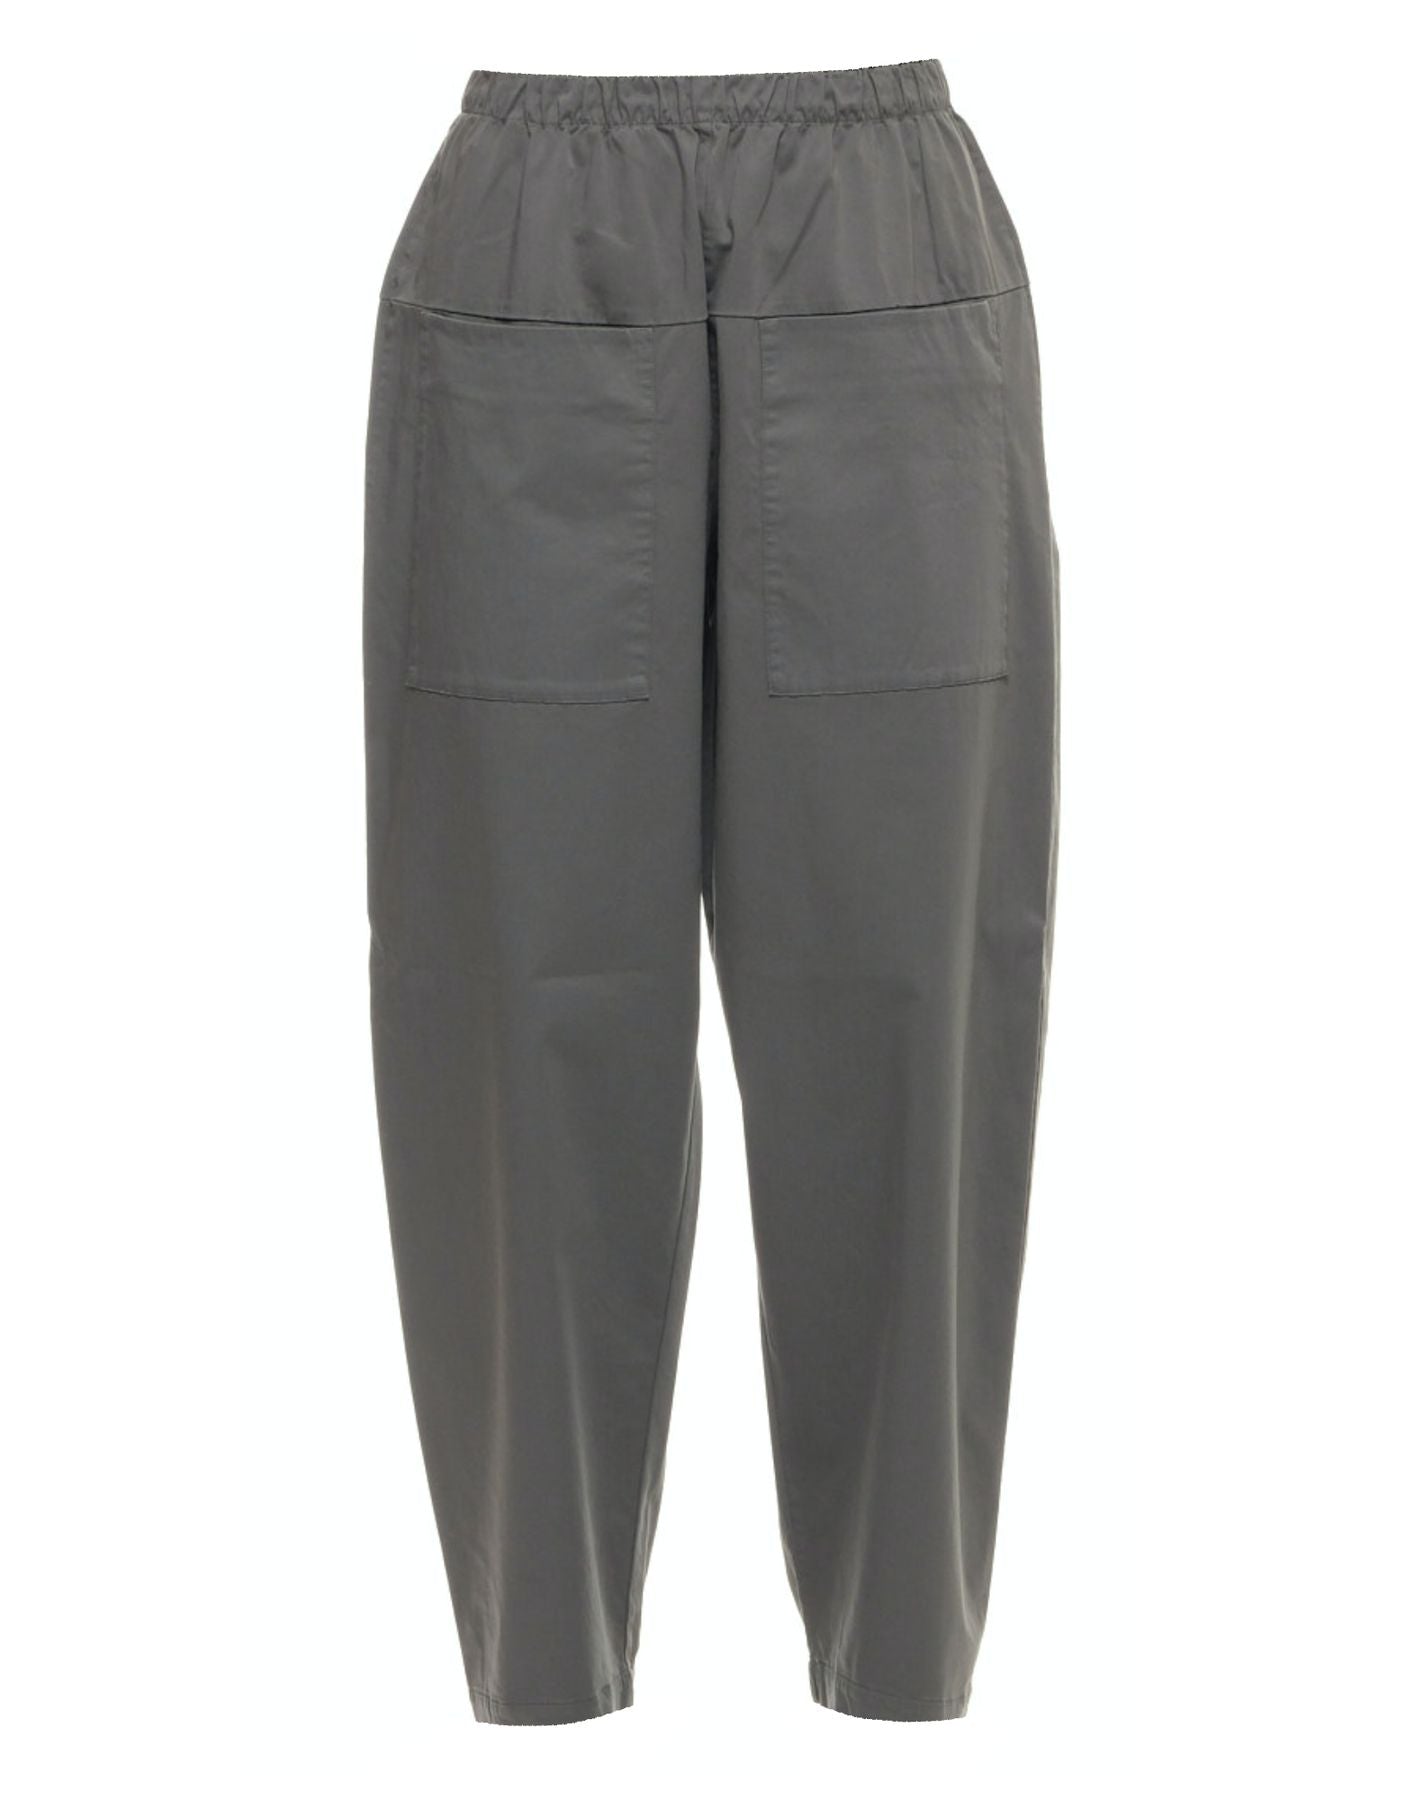 Pants for woman CFDTRWO242 12 GREY TRANSIT